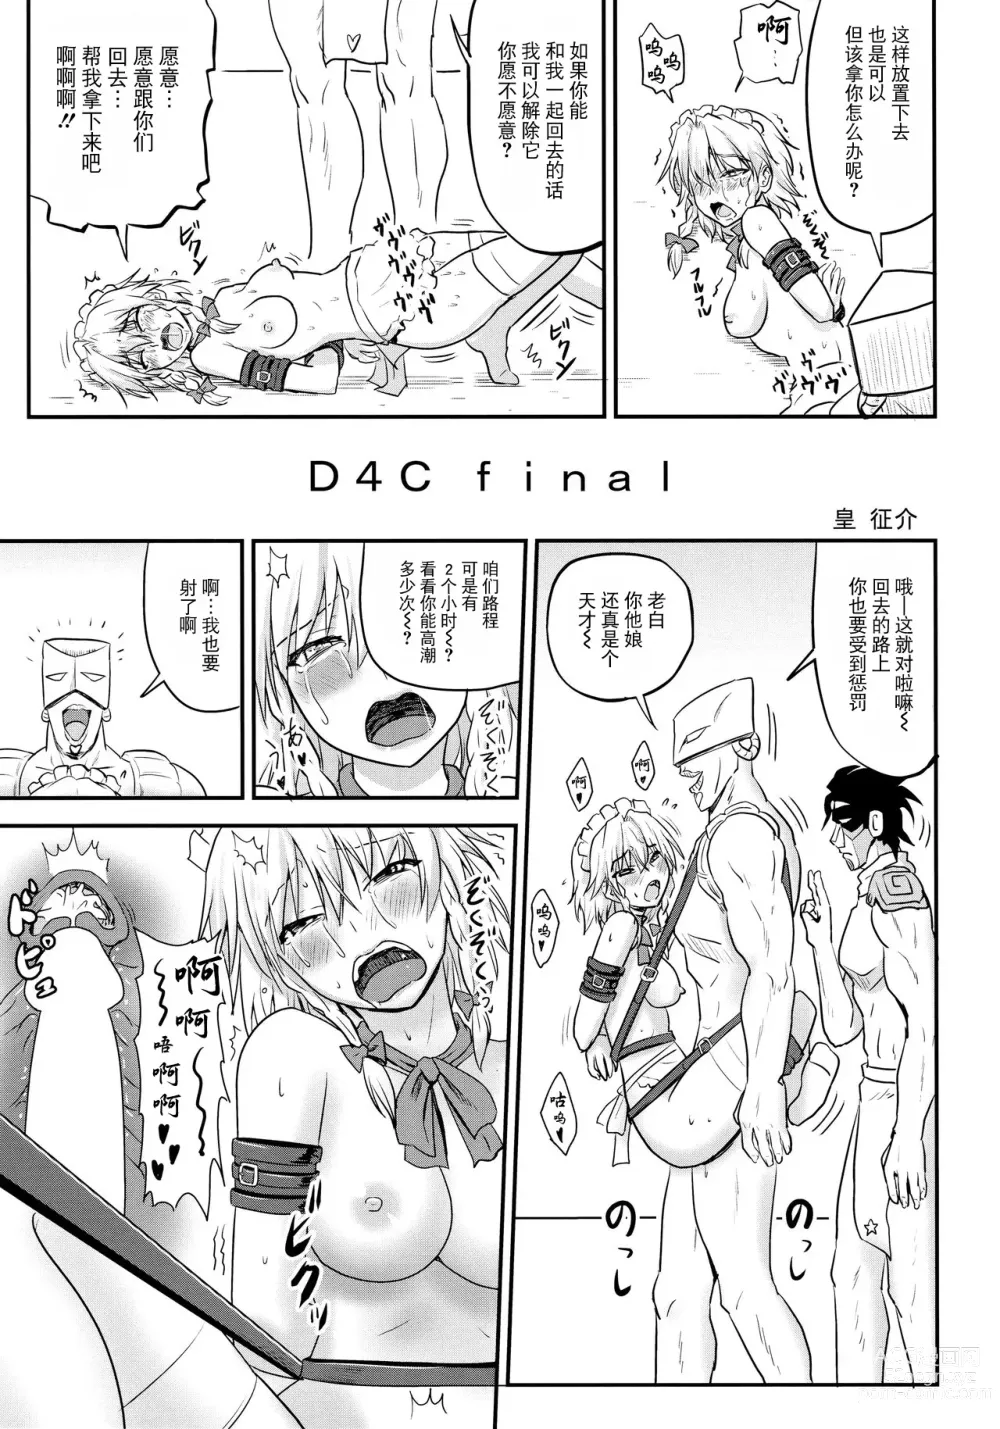 Page 4 of doujinshi D4C final